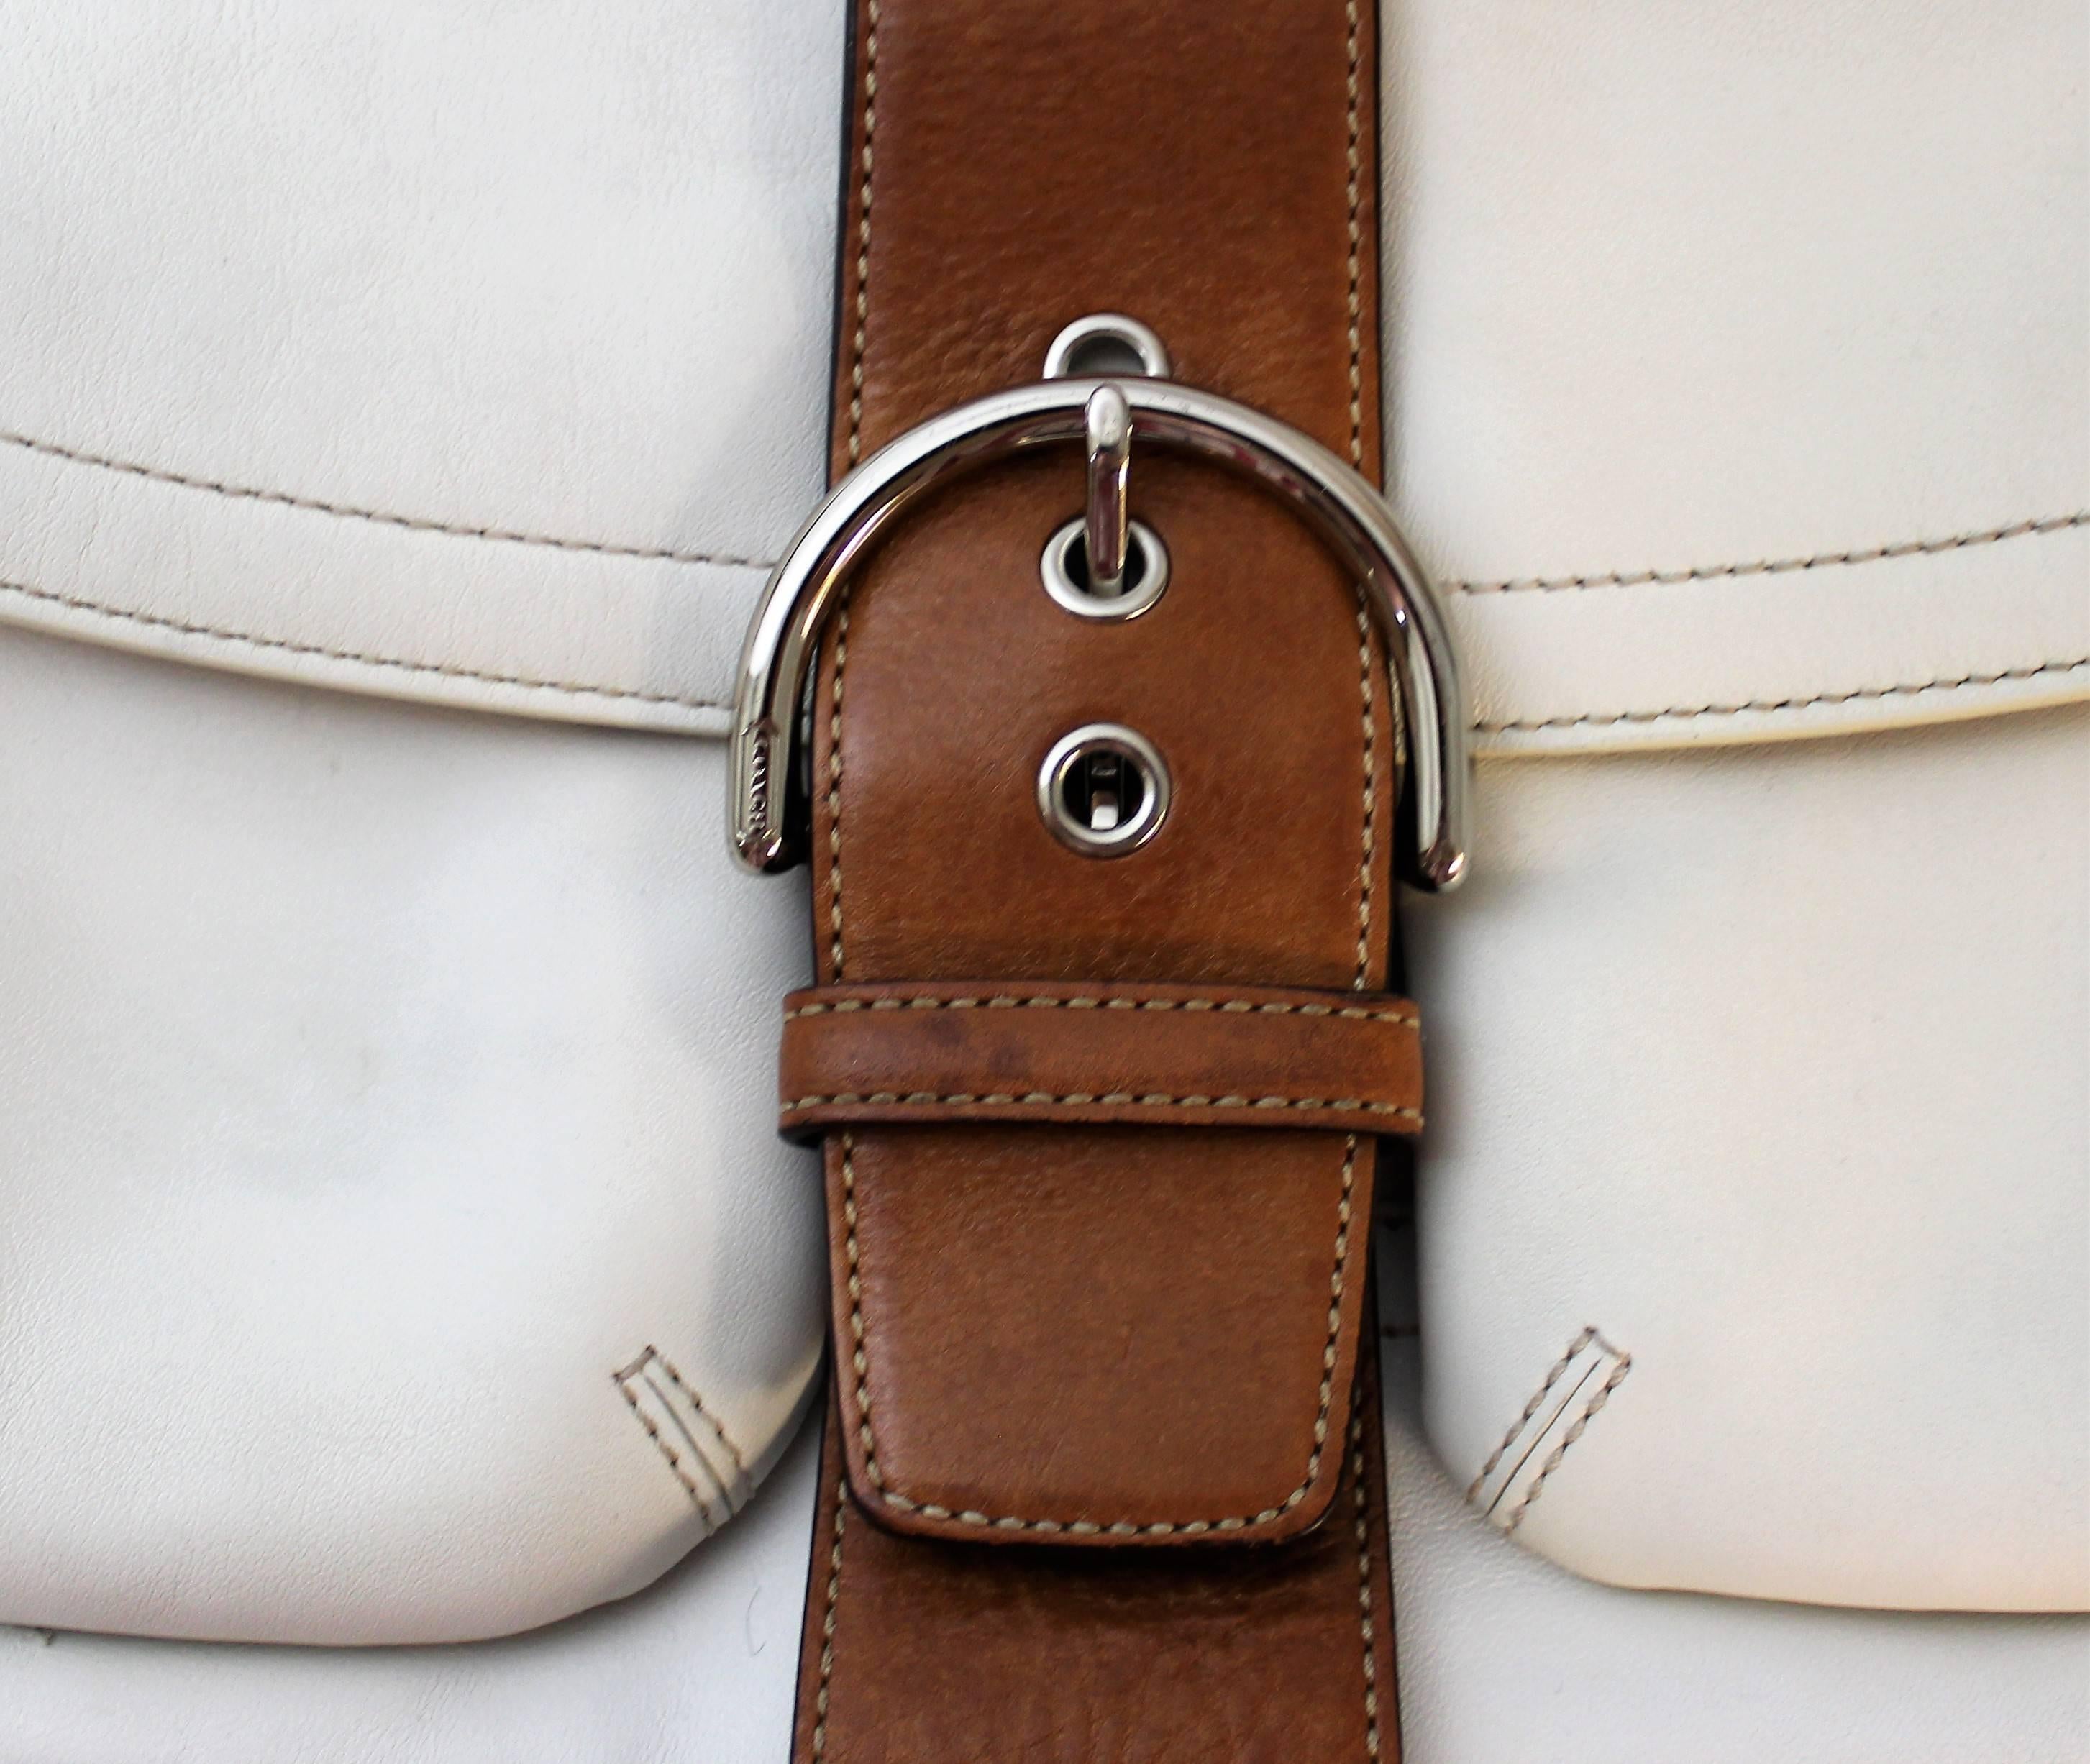 Leather Coach Handbag or Purse In Good Condition For Sale In Hamilton, Ontario